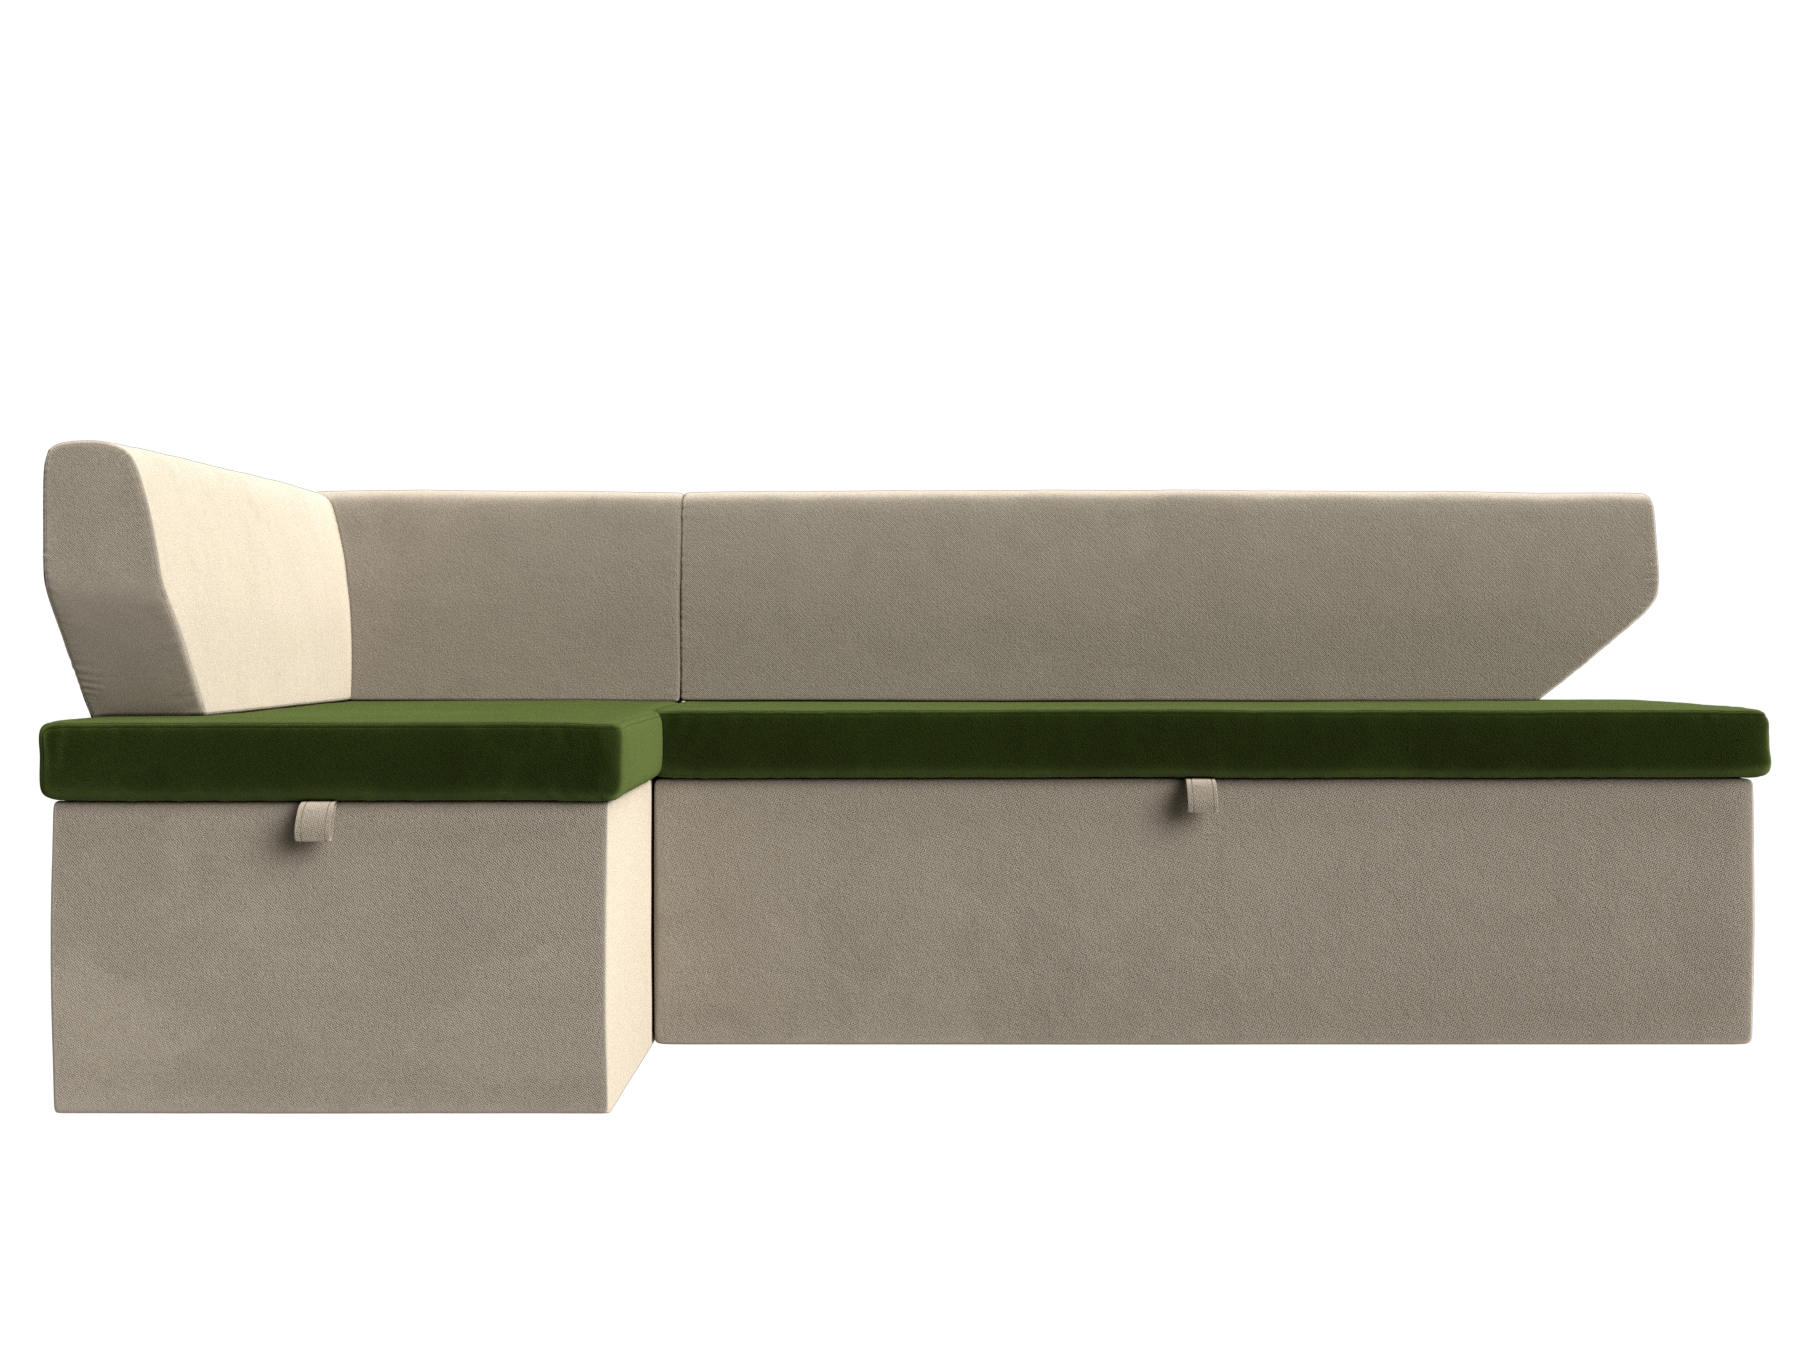 Кухонный угловой диван Омура Левый Зеленый, Бежевый, ЛДСП кухонный угловой диван лига диванов омура микровельвет бежевый зеленый правый угол 113213